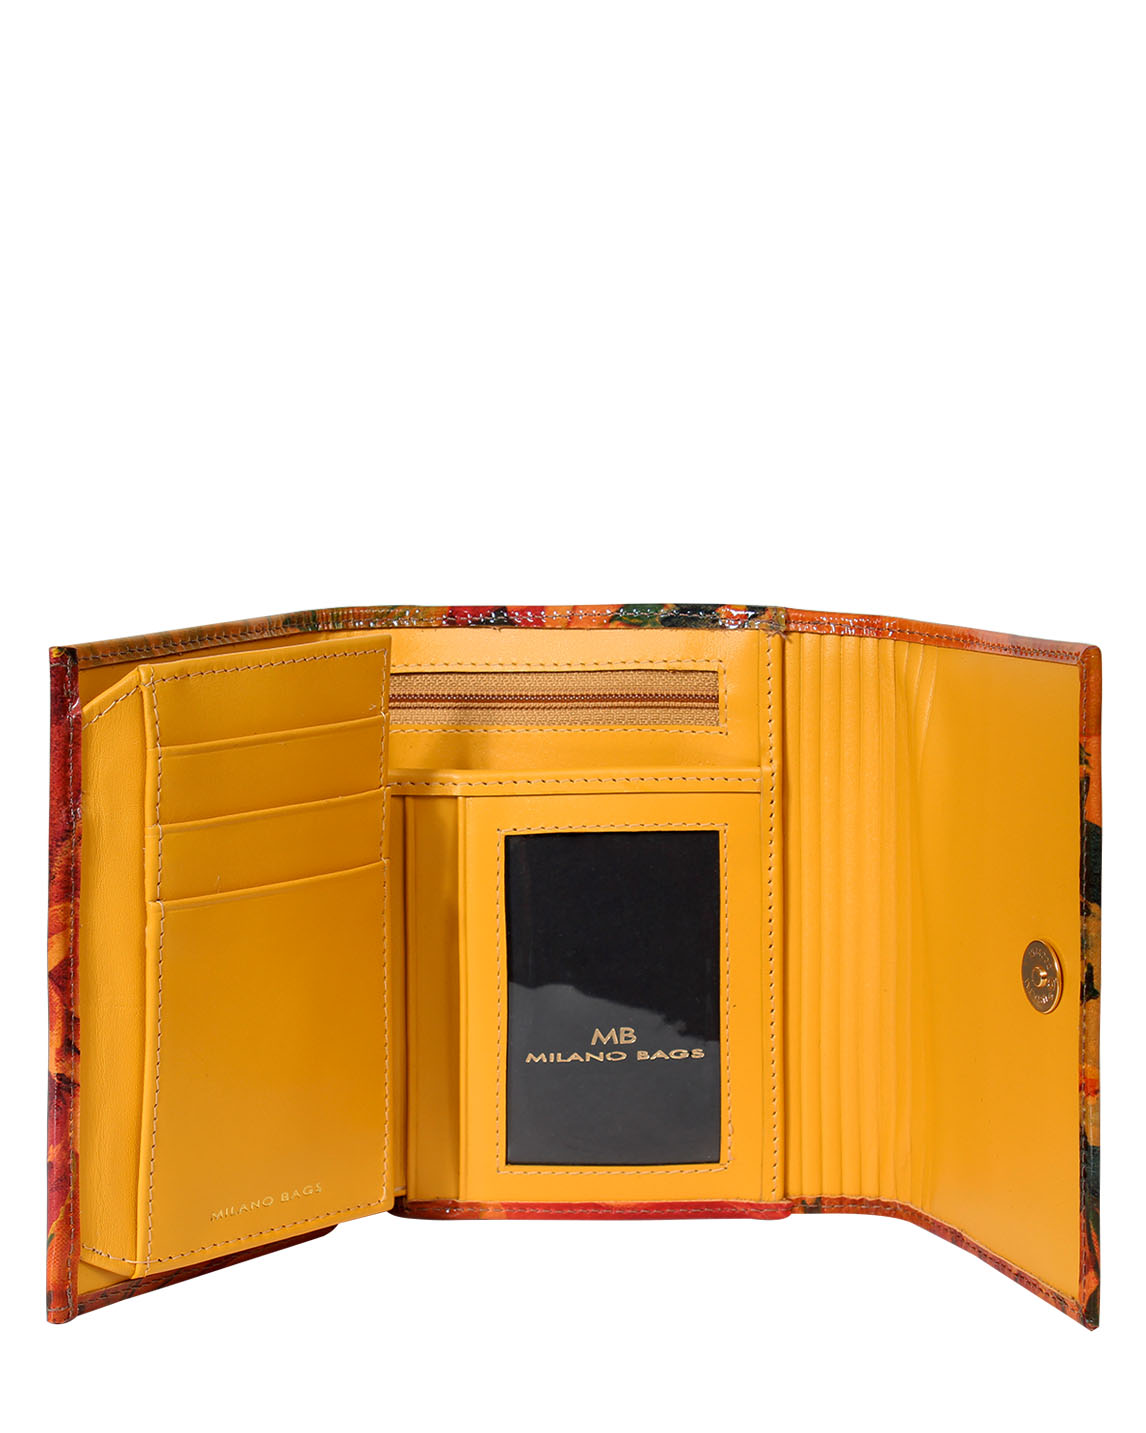 Billetera de Mujer BM-501 Color Naranja